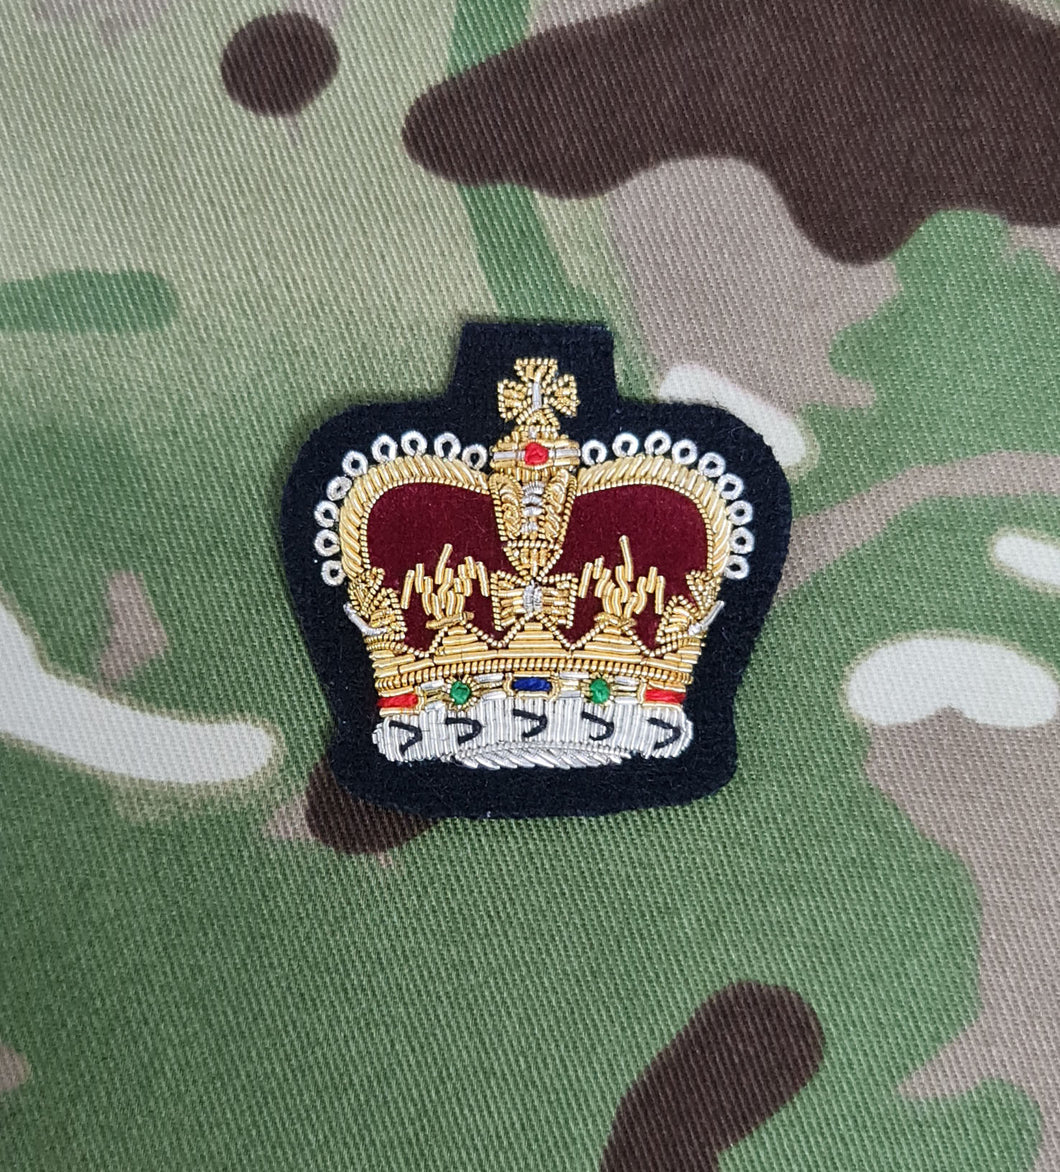 Staff Sergeant (SSGT) Crown Gold On Black No1 Dress Badge